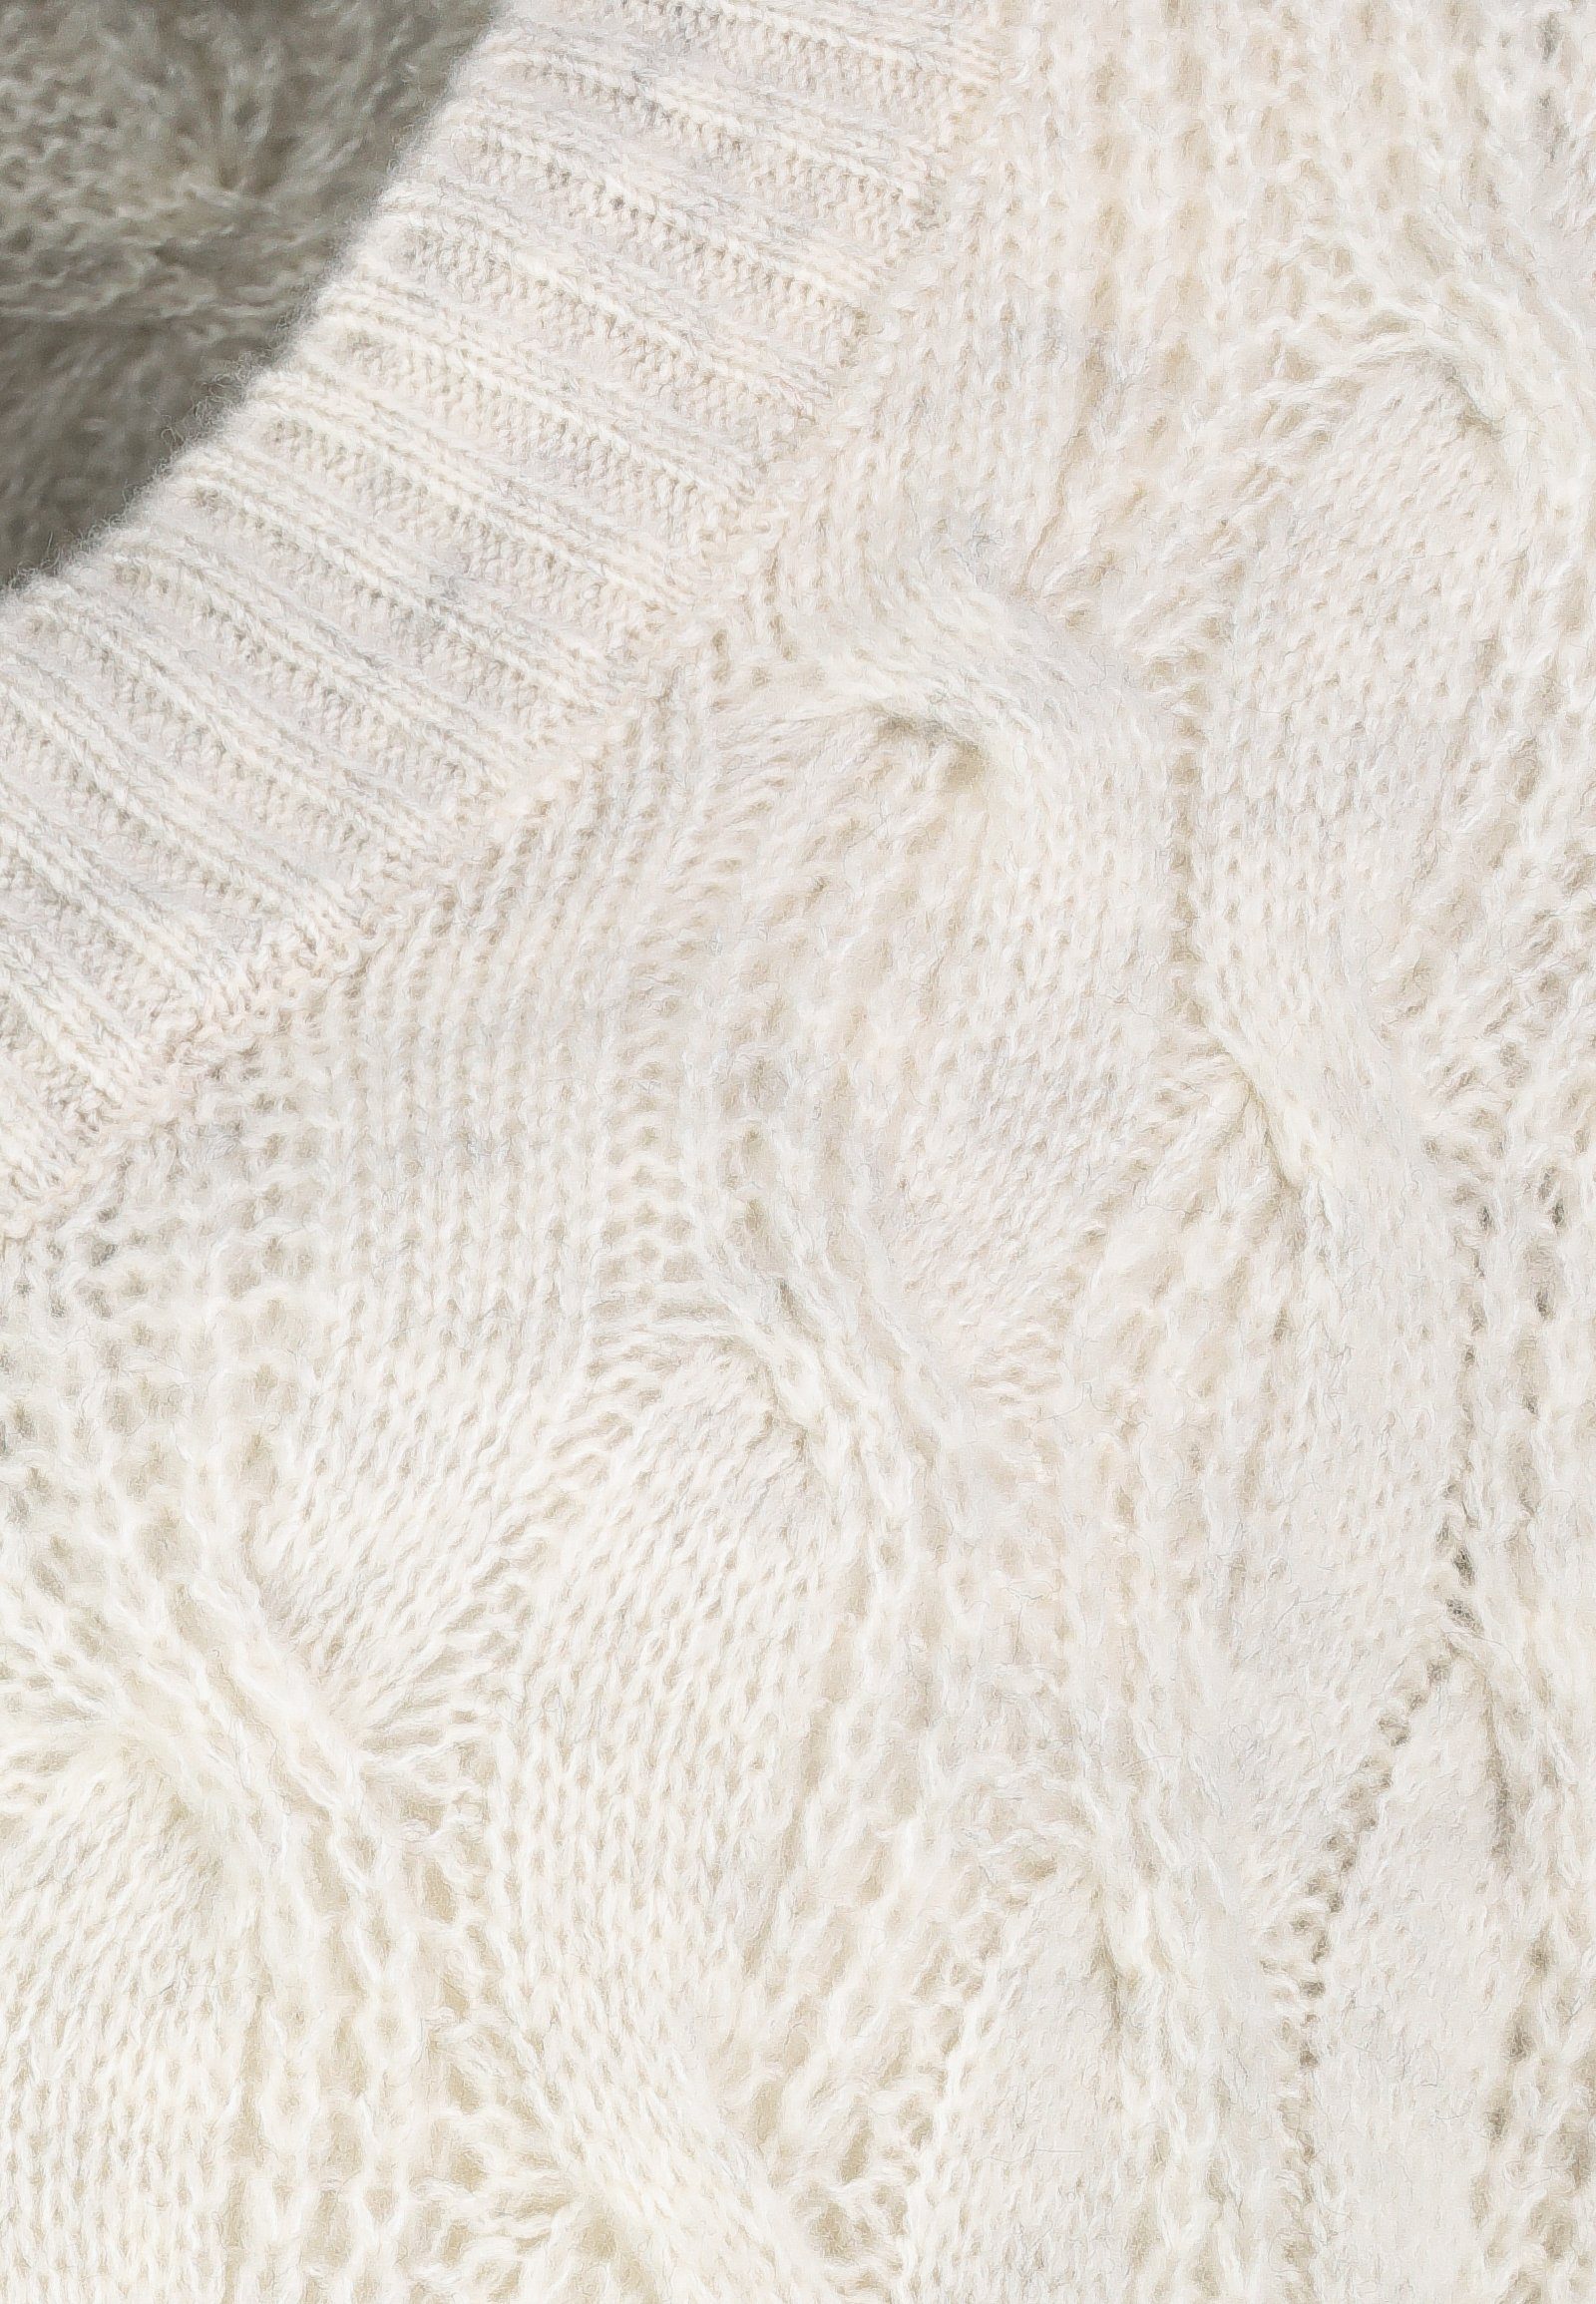 SUBLEVEL Strickpullover white mit Pullover Strickmuster